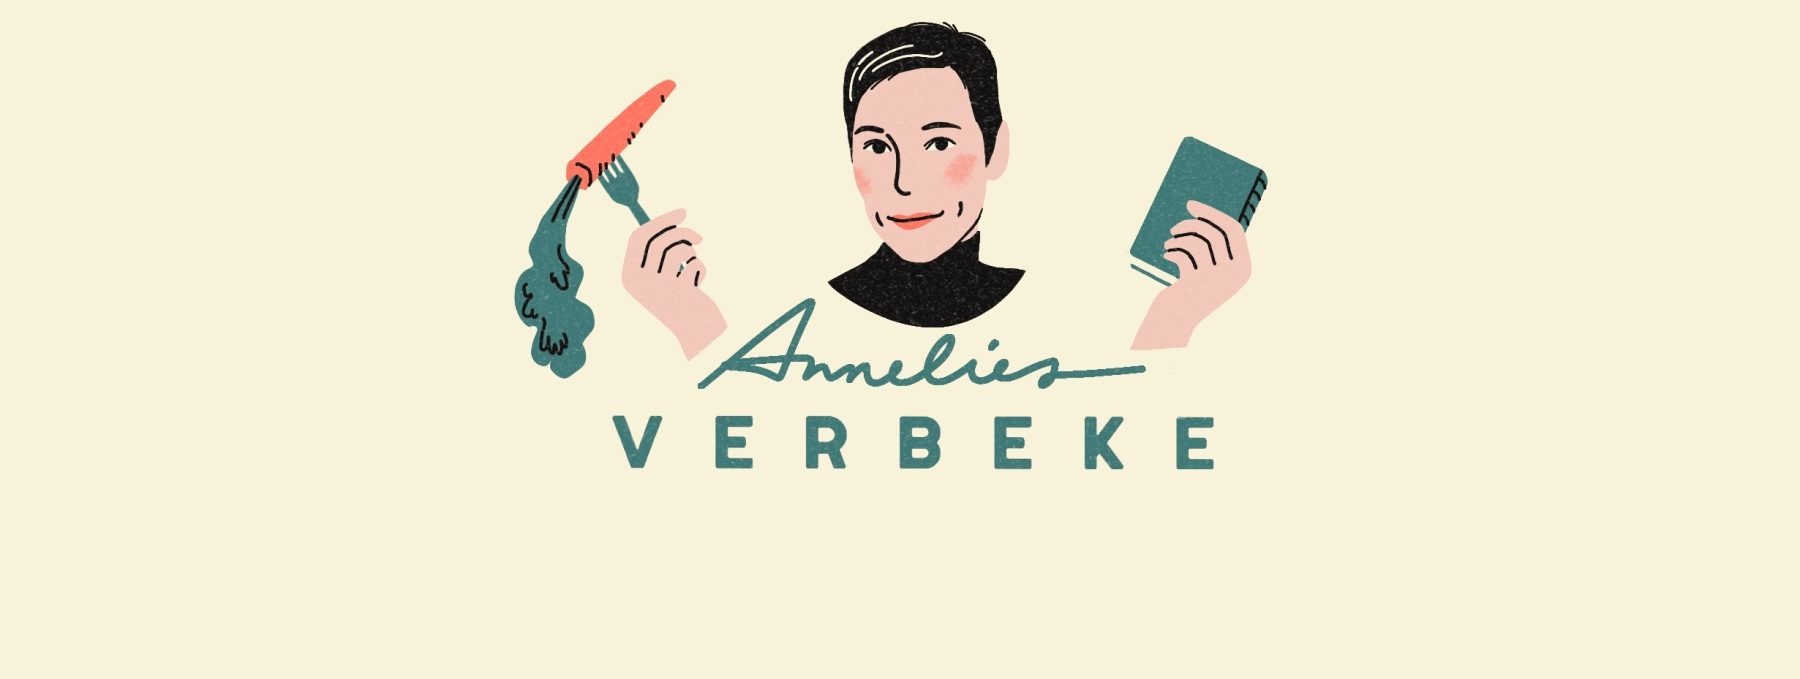 kuisine: l’interview food de l’autrice Annelies Verbeke